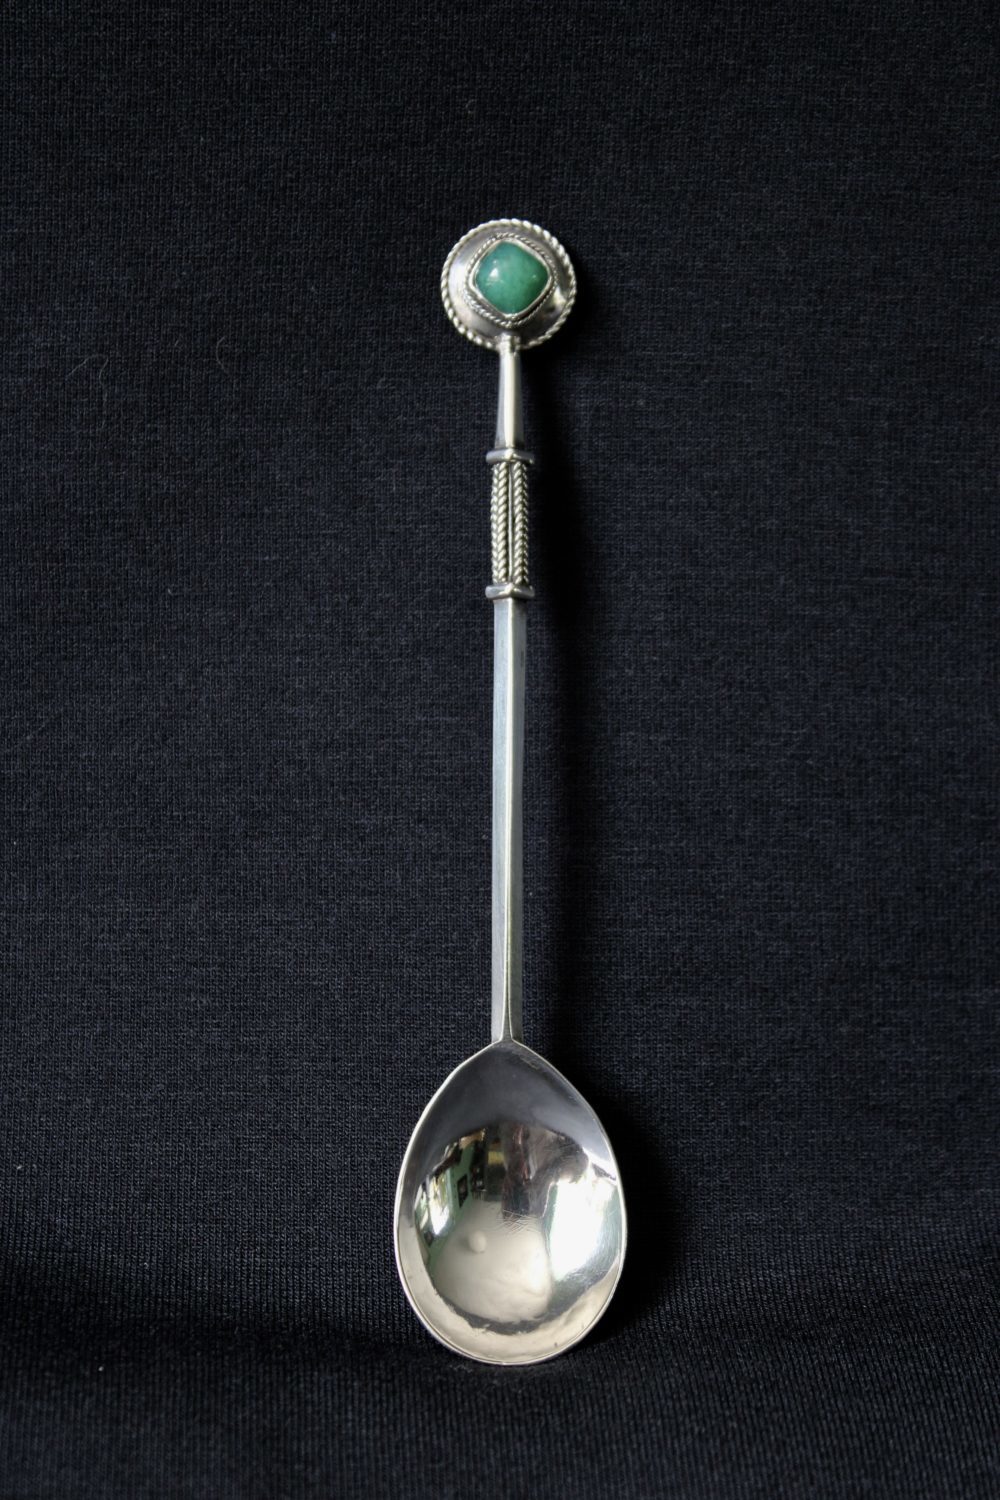 Bernard Cuzner silver spoon